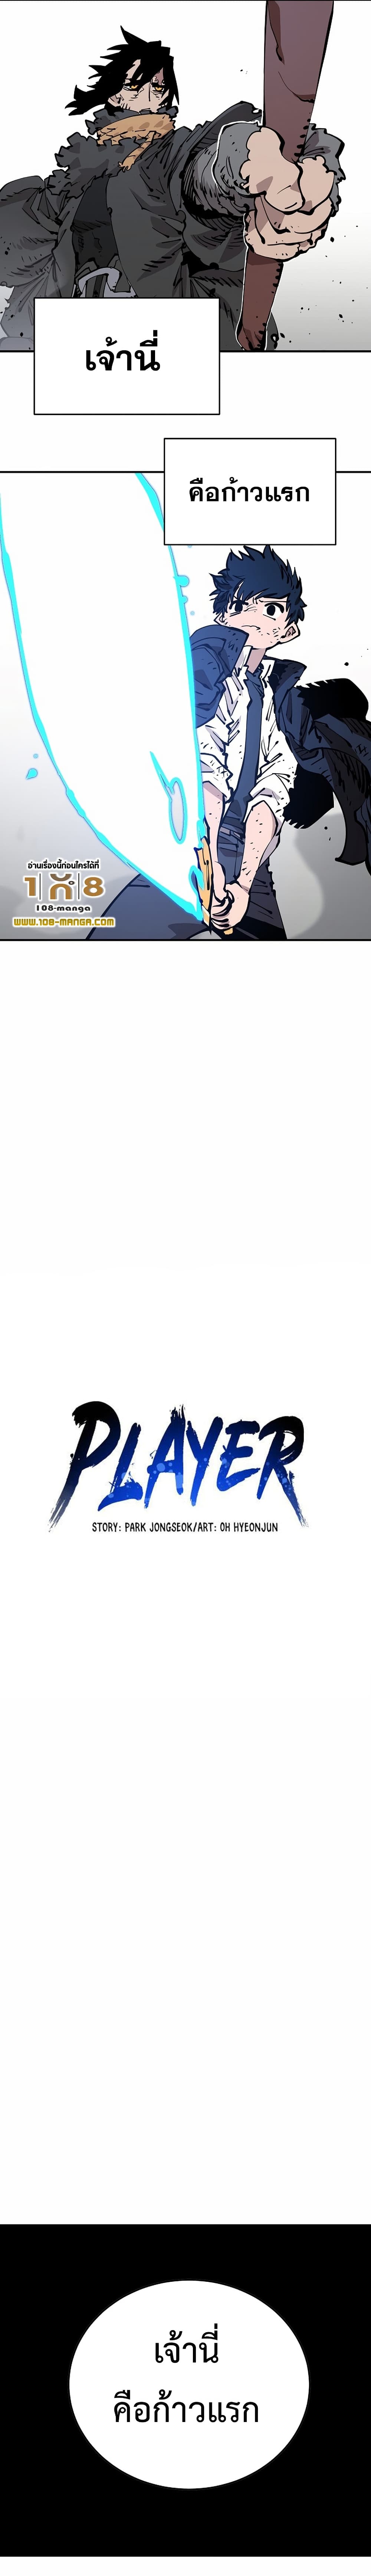 Player84 10